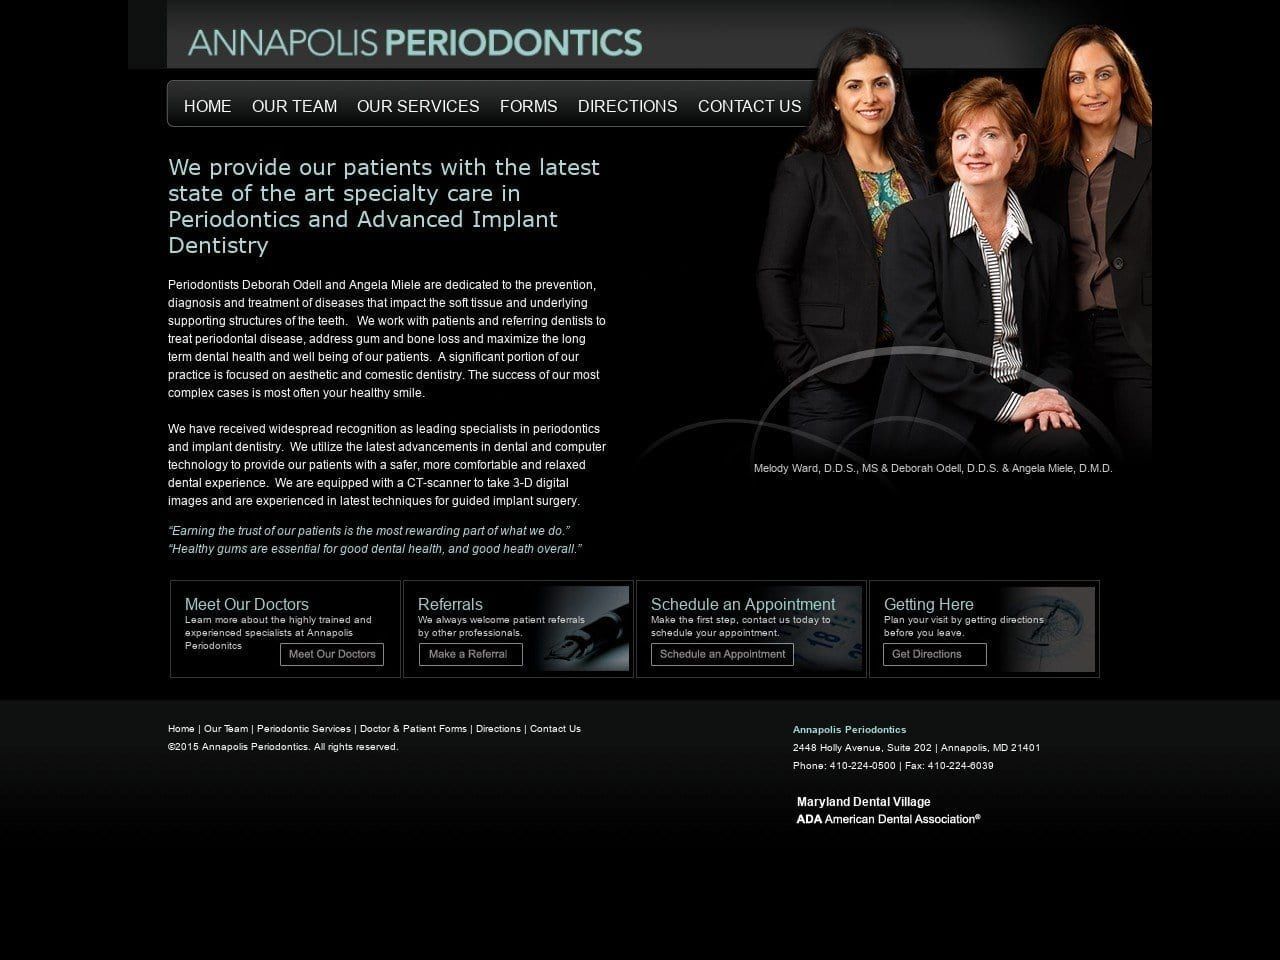 Annapolis Periodontics Website Screenshot from annapolisperiodontics.net